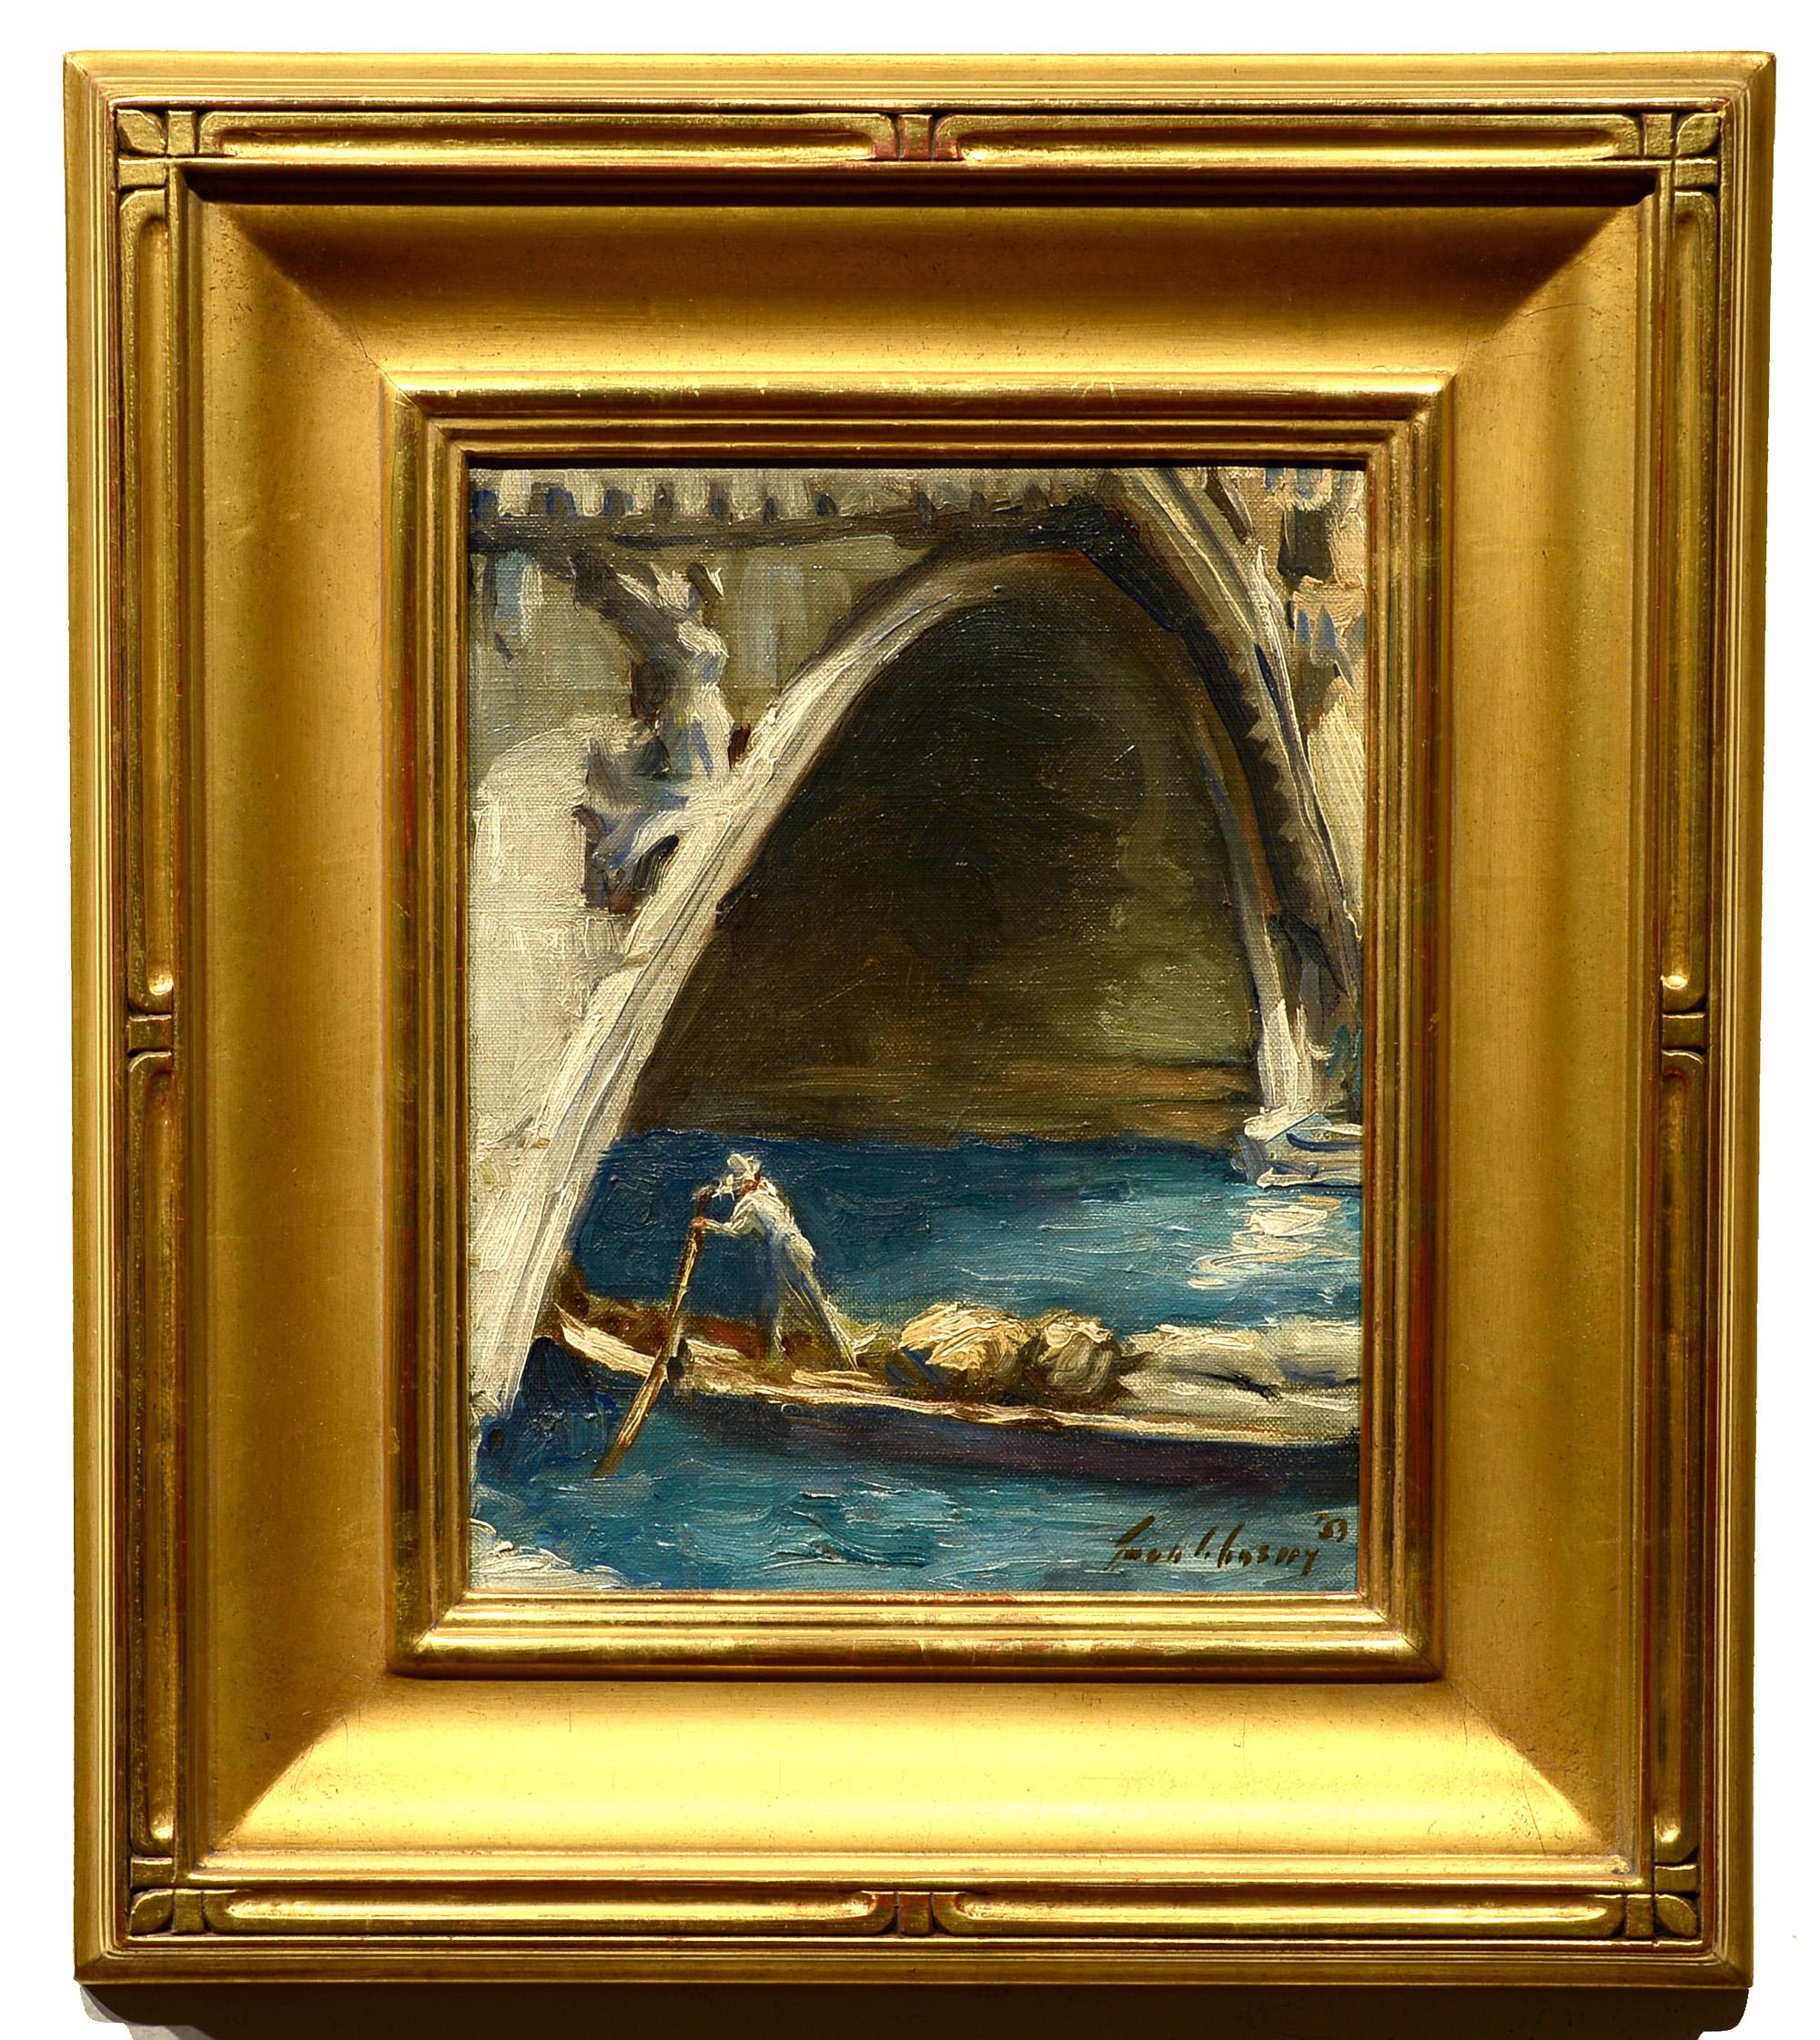 Rialto Bridge, Venice - Painting by Unknown